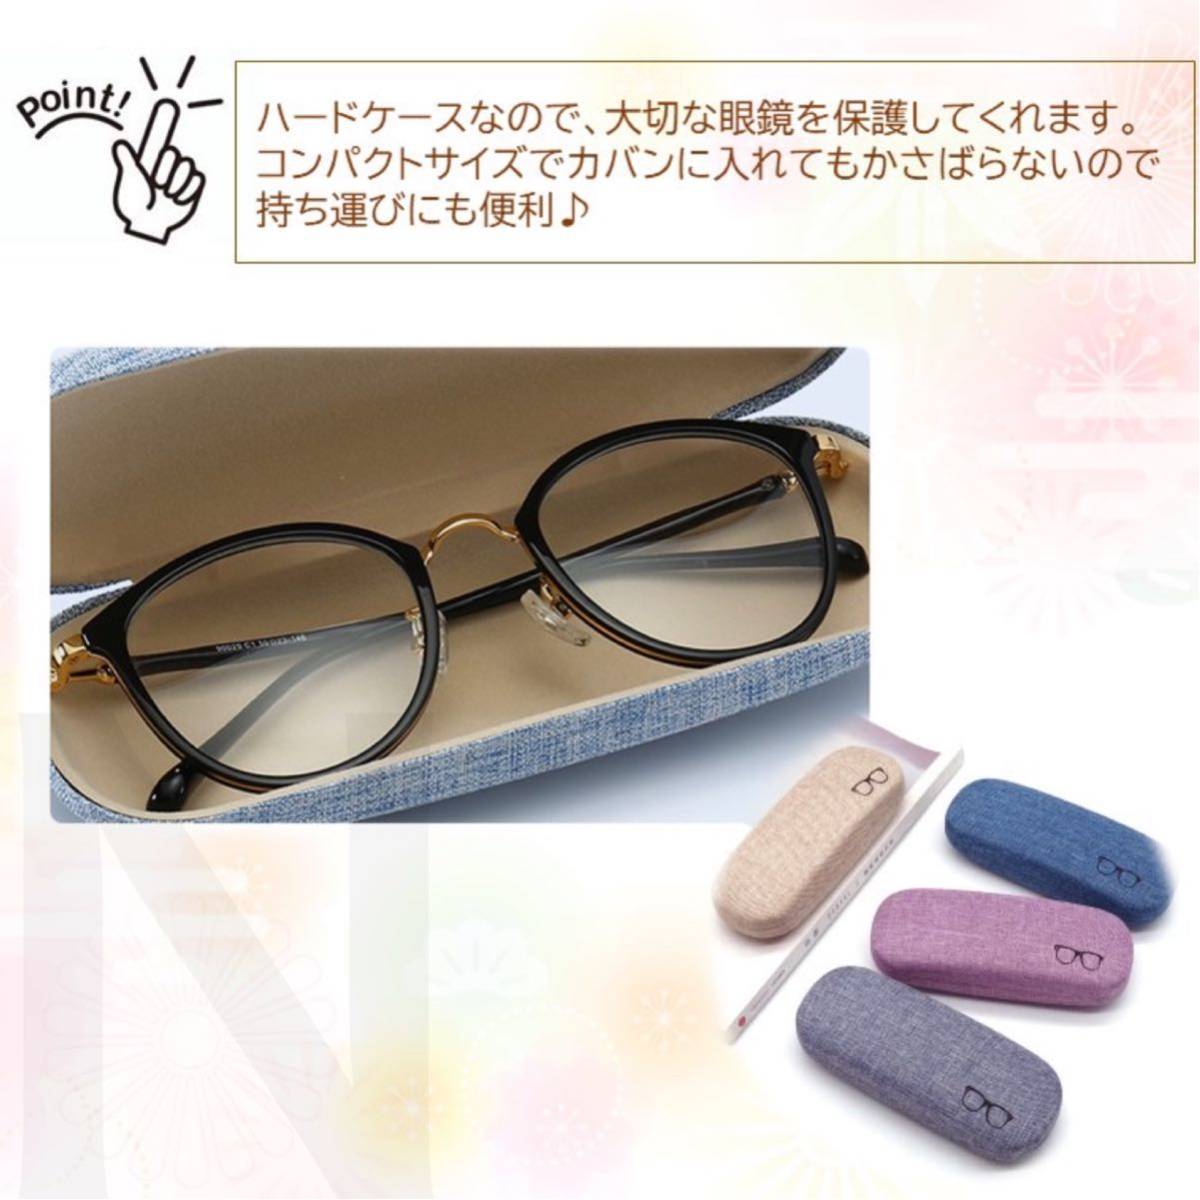  beige glasses case hard case stylish one Point glasses inserting sunglasses case flax felt protection case 